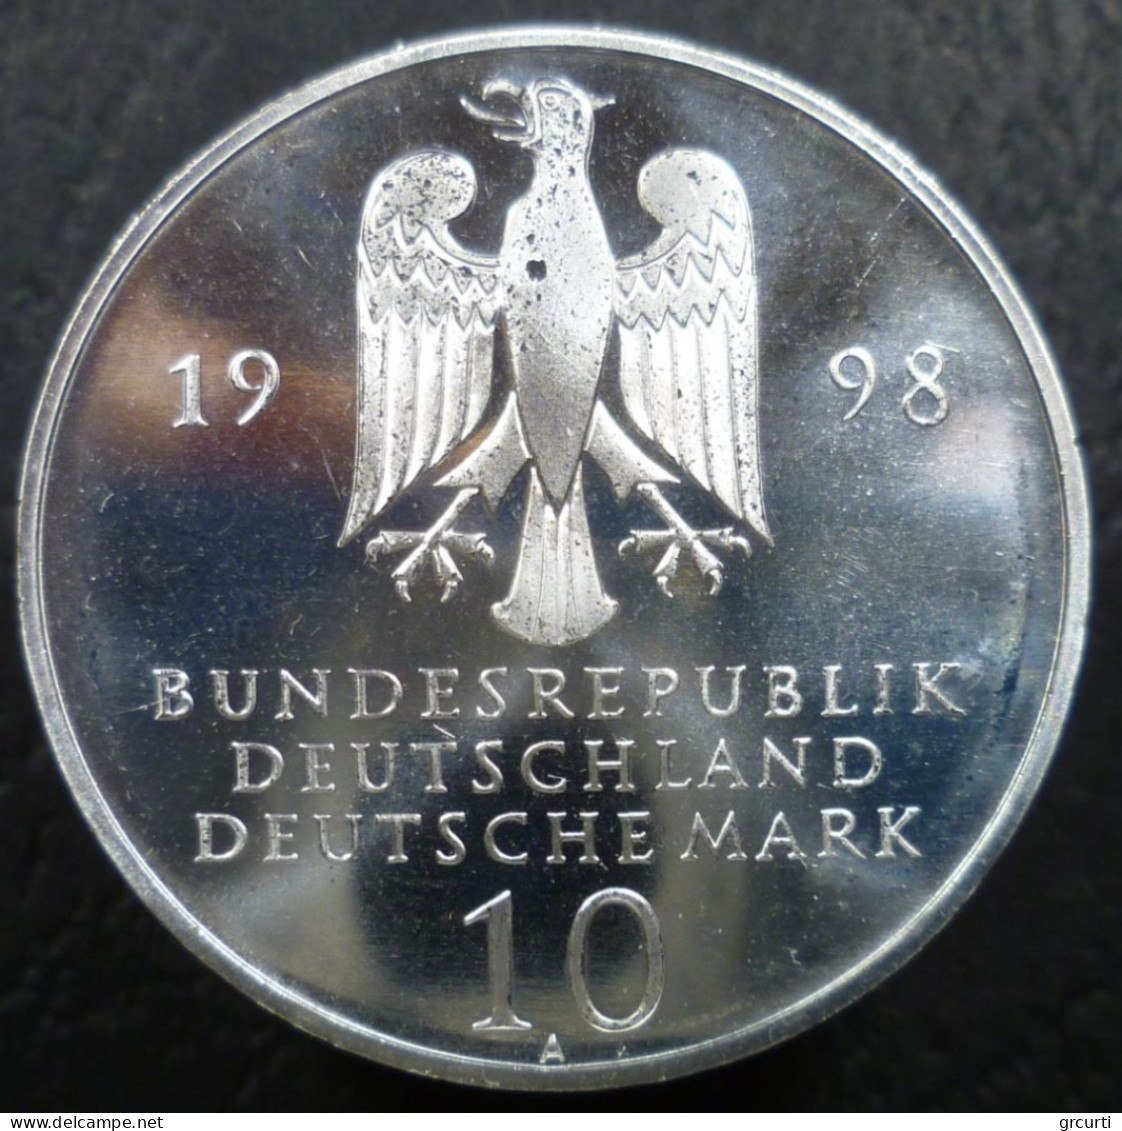 Germania - RFT - 10 Mark 1998 A - 300° Franckesche Stiftungen - KM# 194 - 10 Marcos